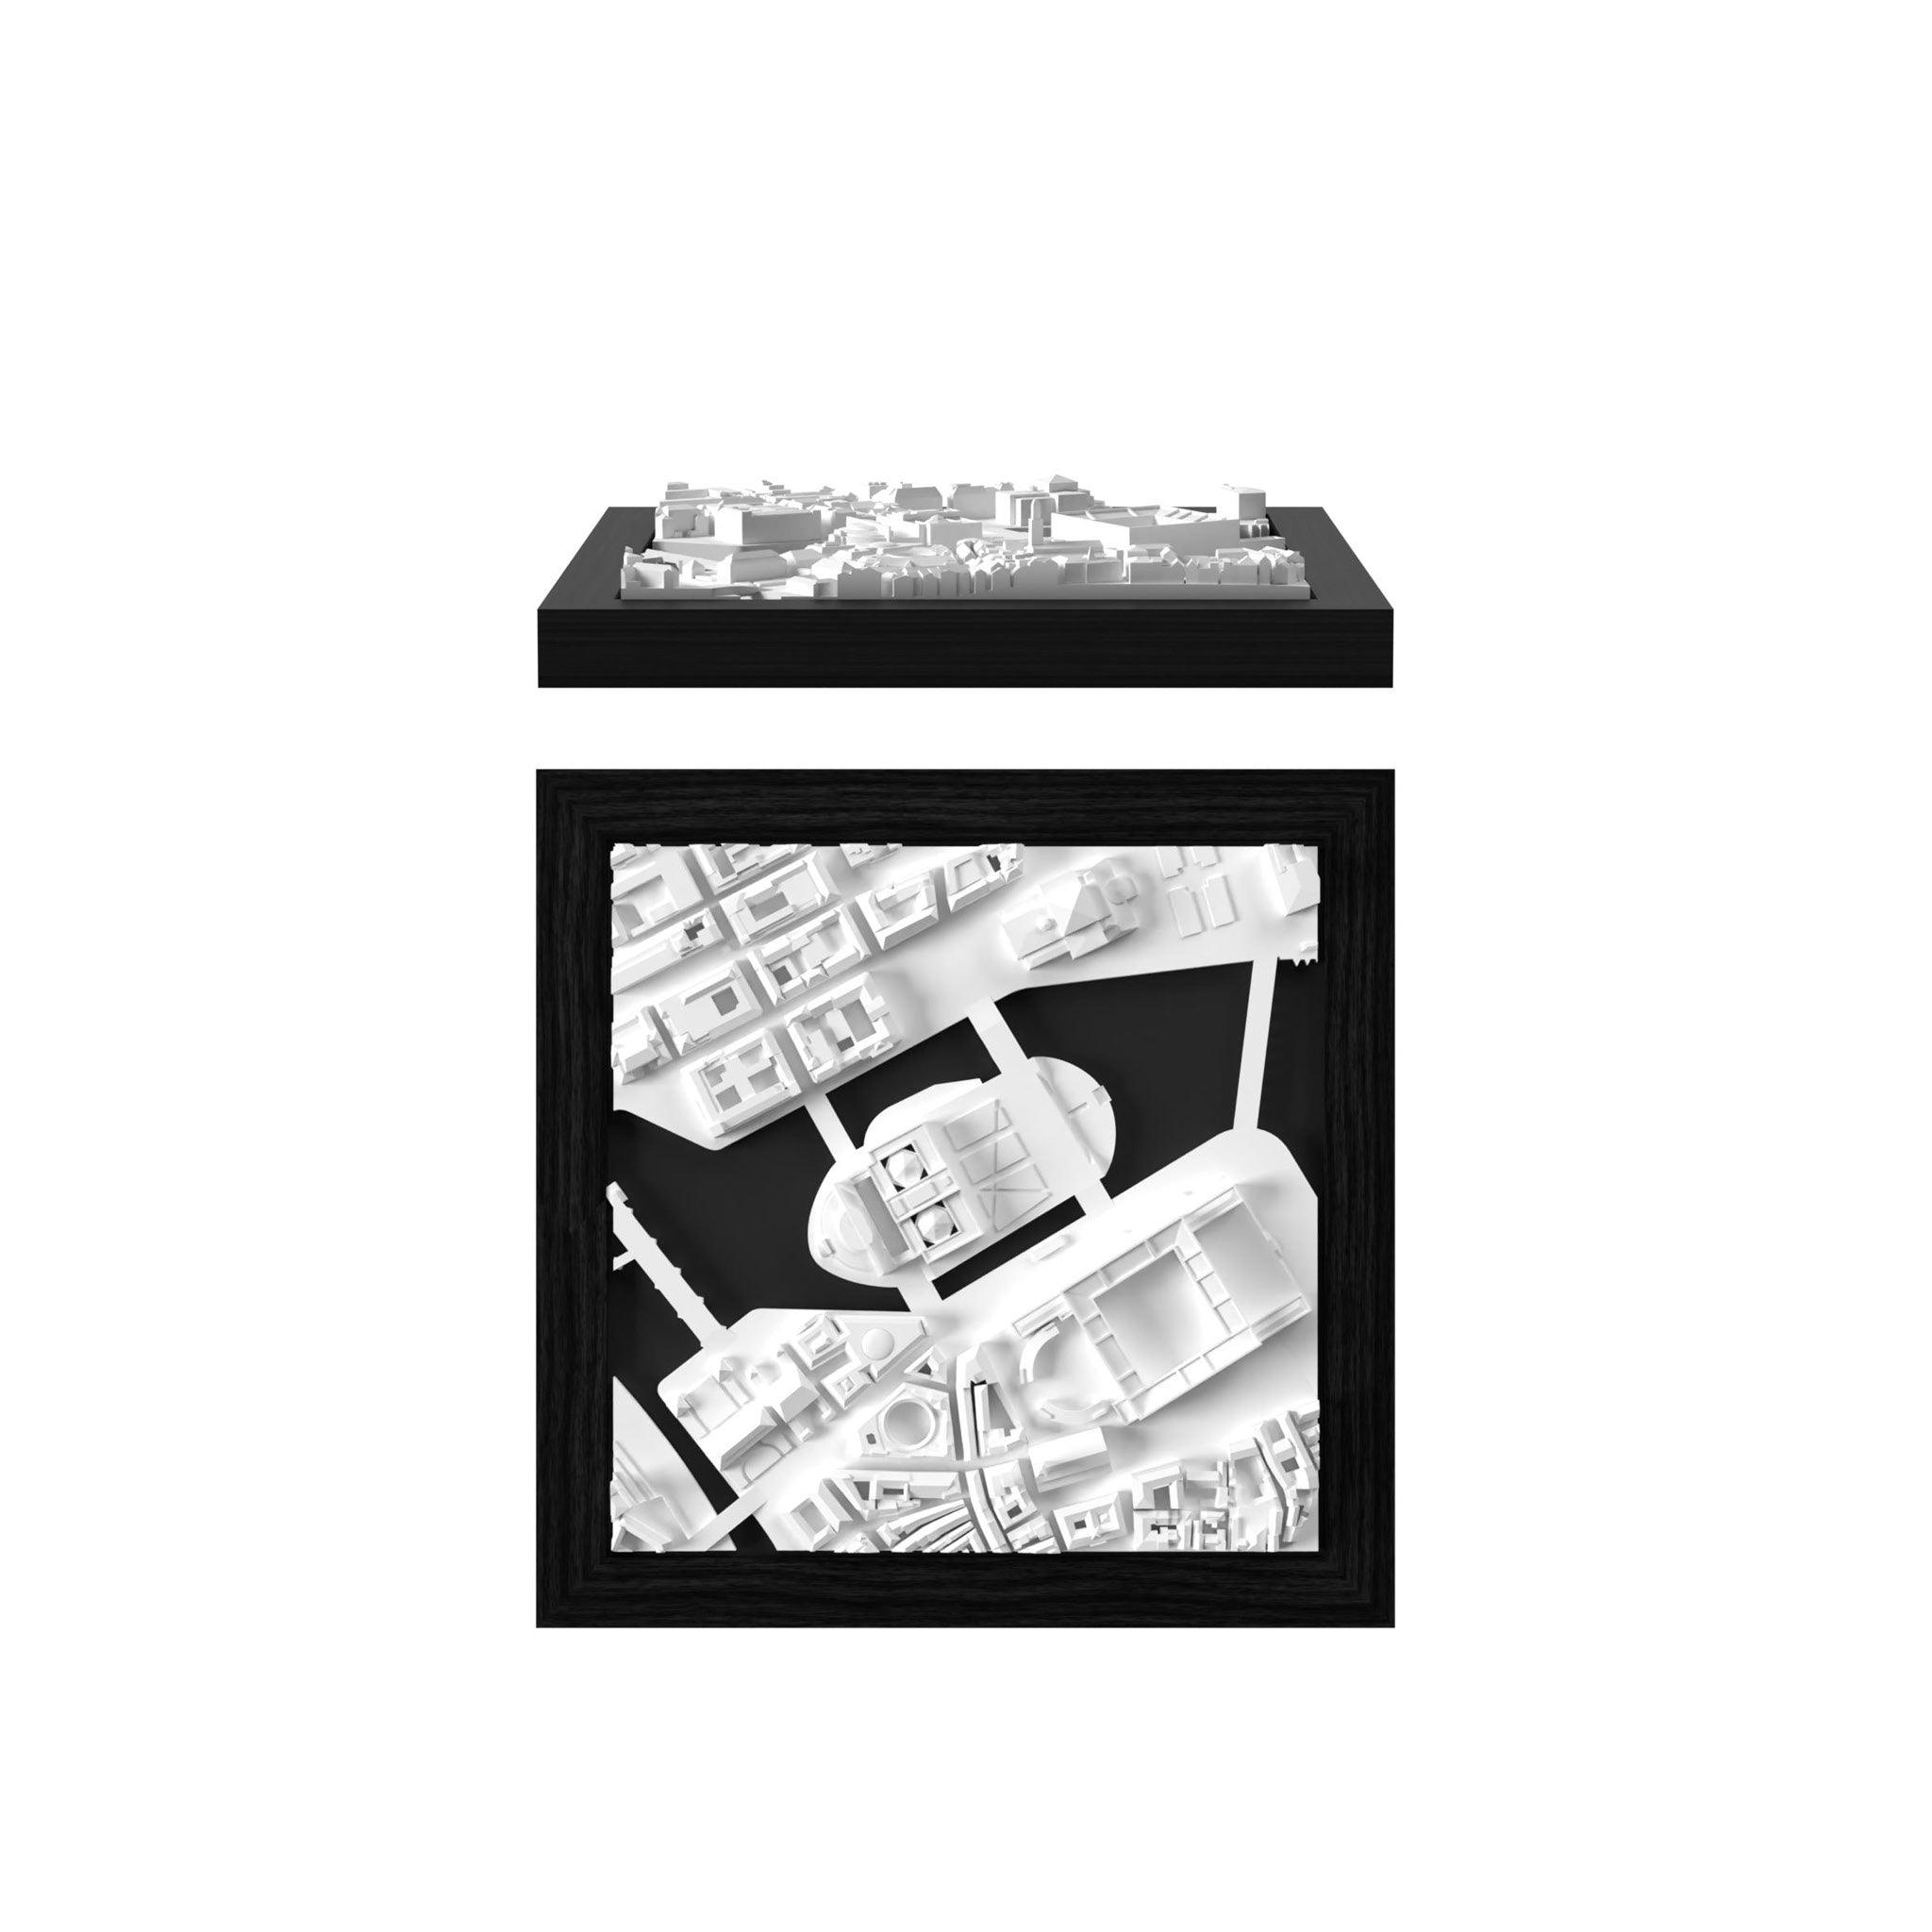 Stockholm 3D City Model Cube, Europe - CITYFRAMES